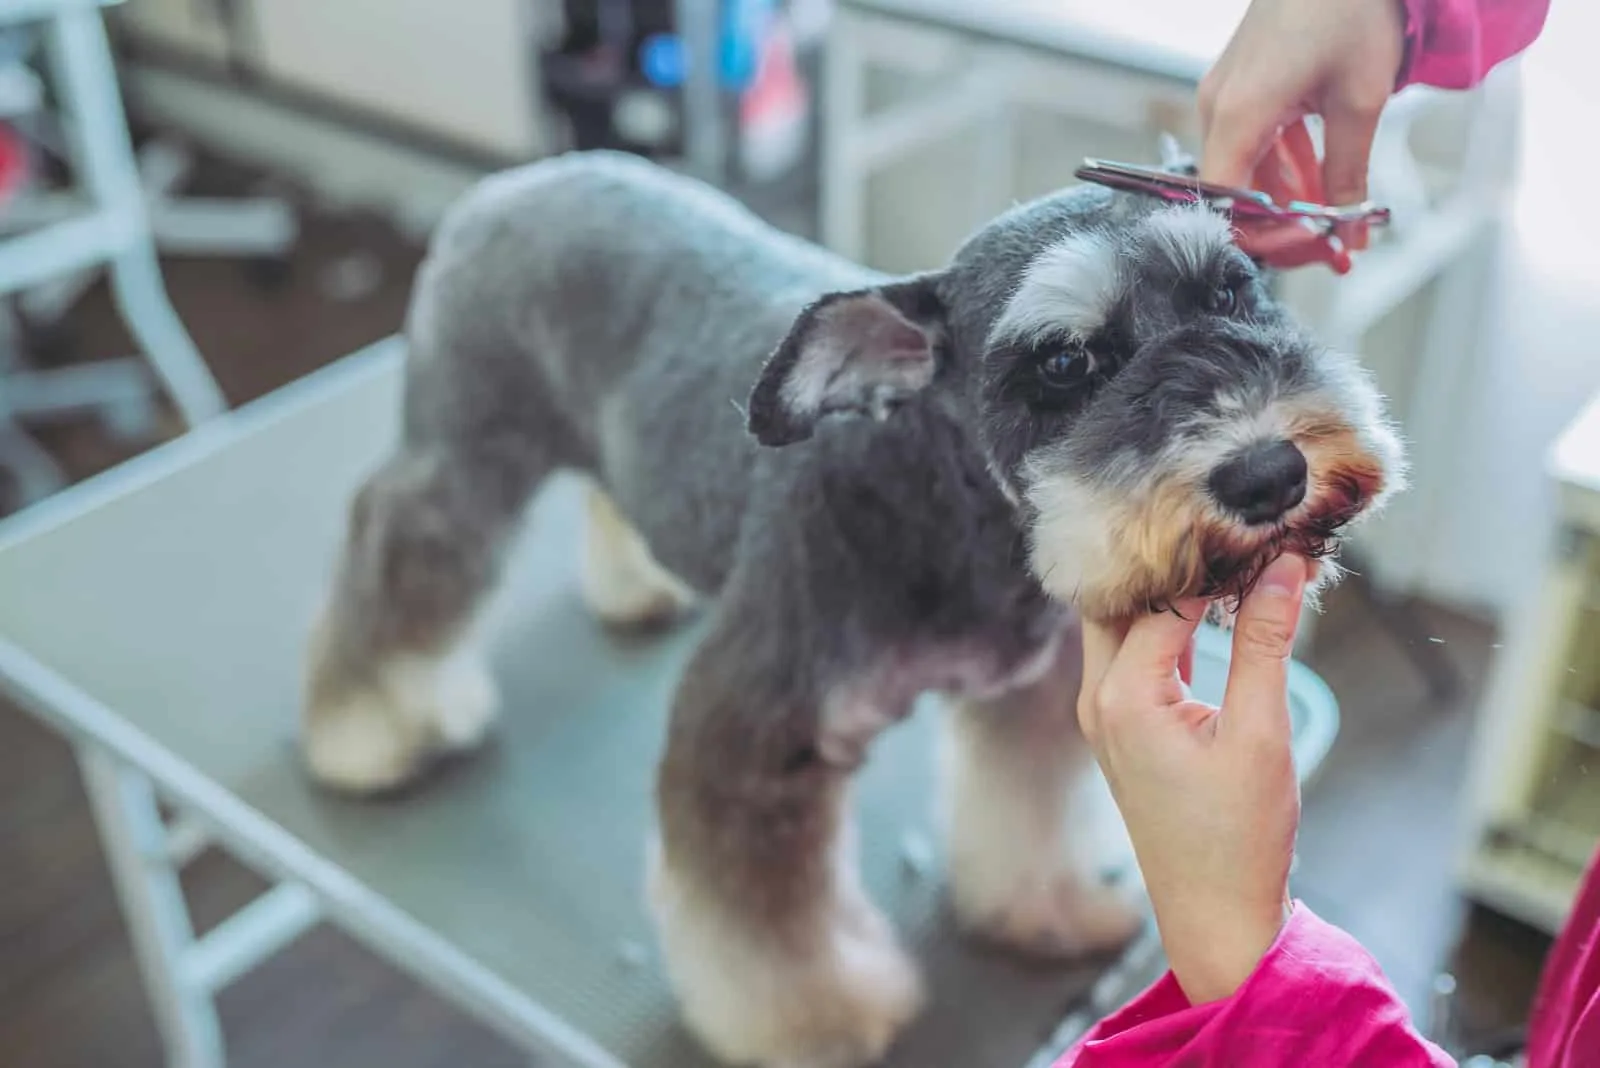 Schnauzer dog grooming in salon